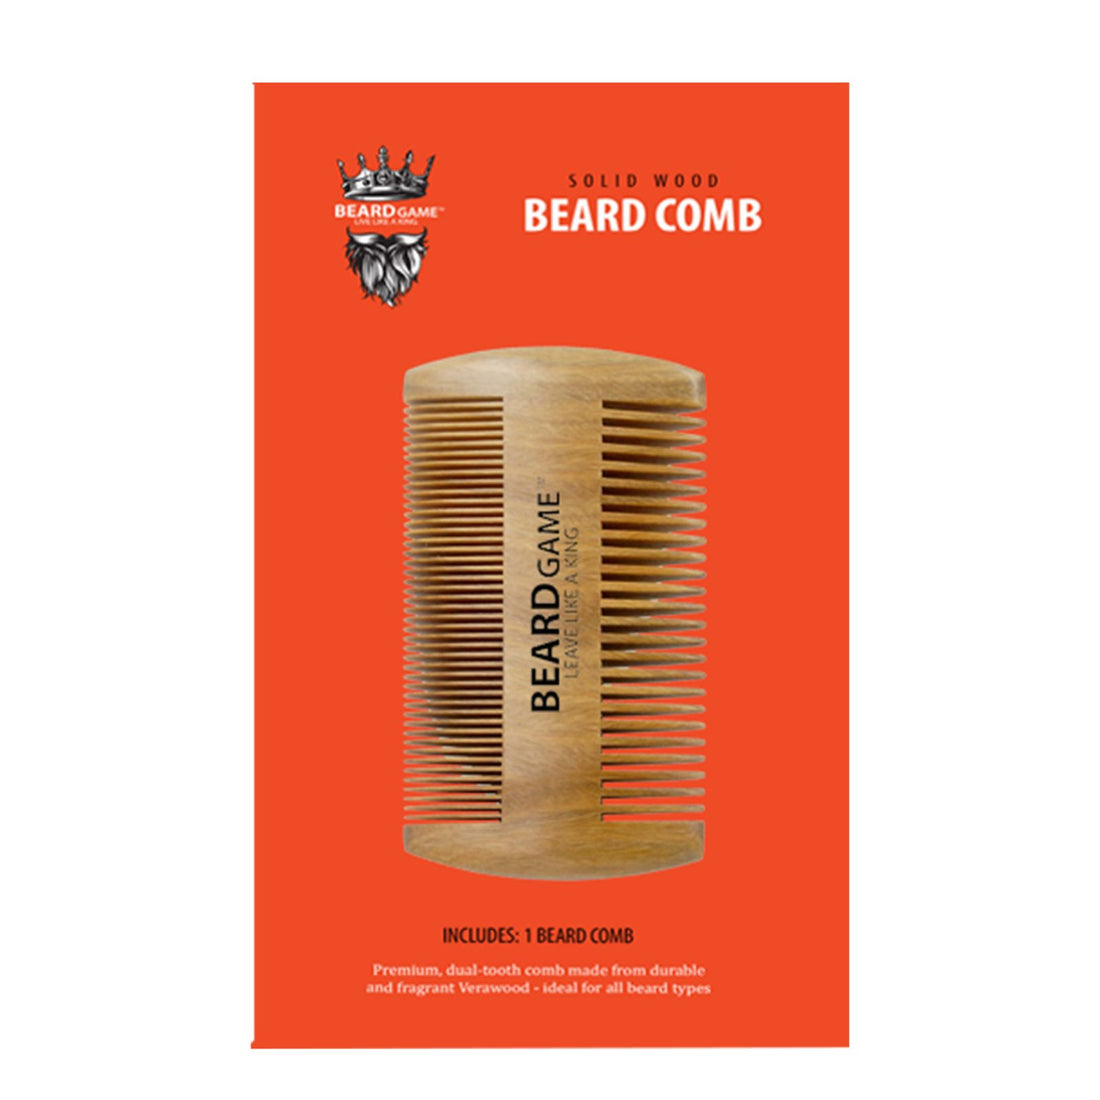 Beard Game Solid Wood Beard Comb